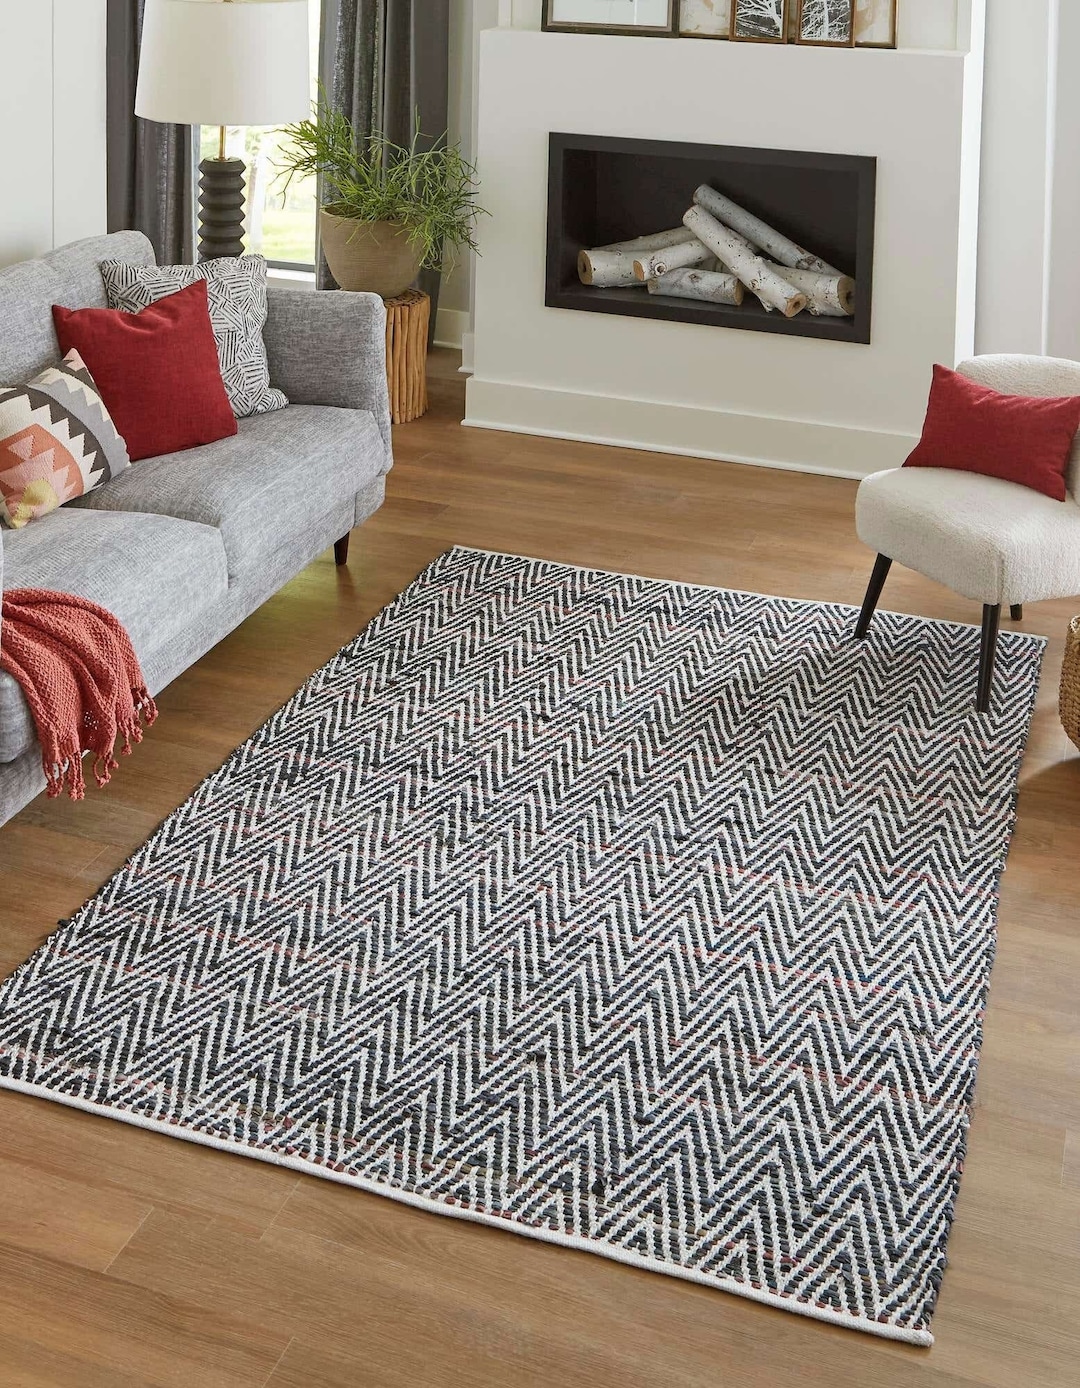 2x3 Feet Rugs Hand Woven Cotton Chindi Area Rug Carpet Room Floor